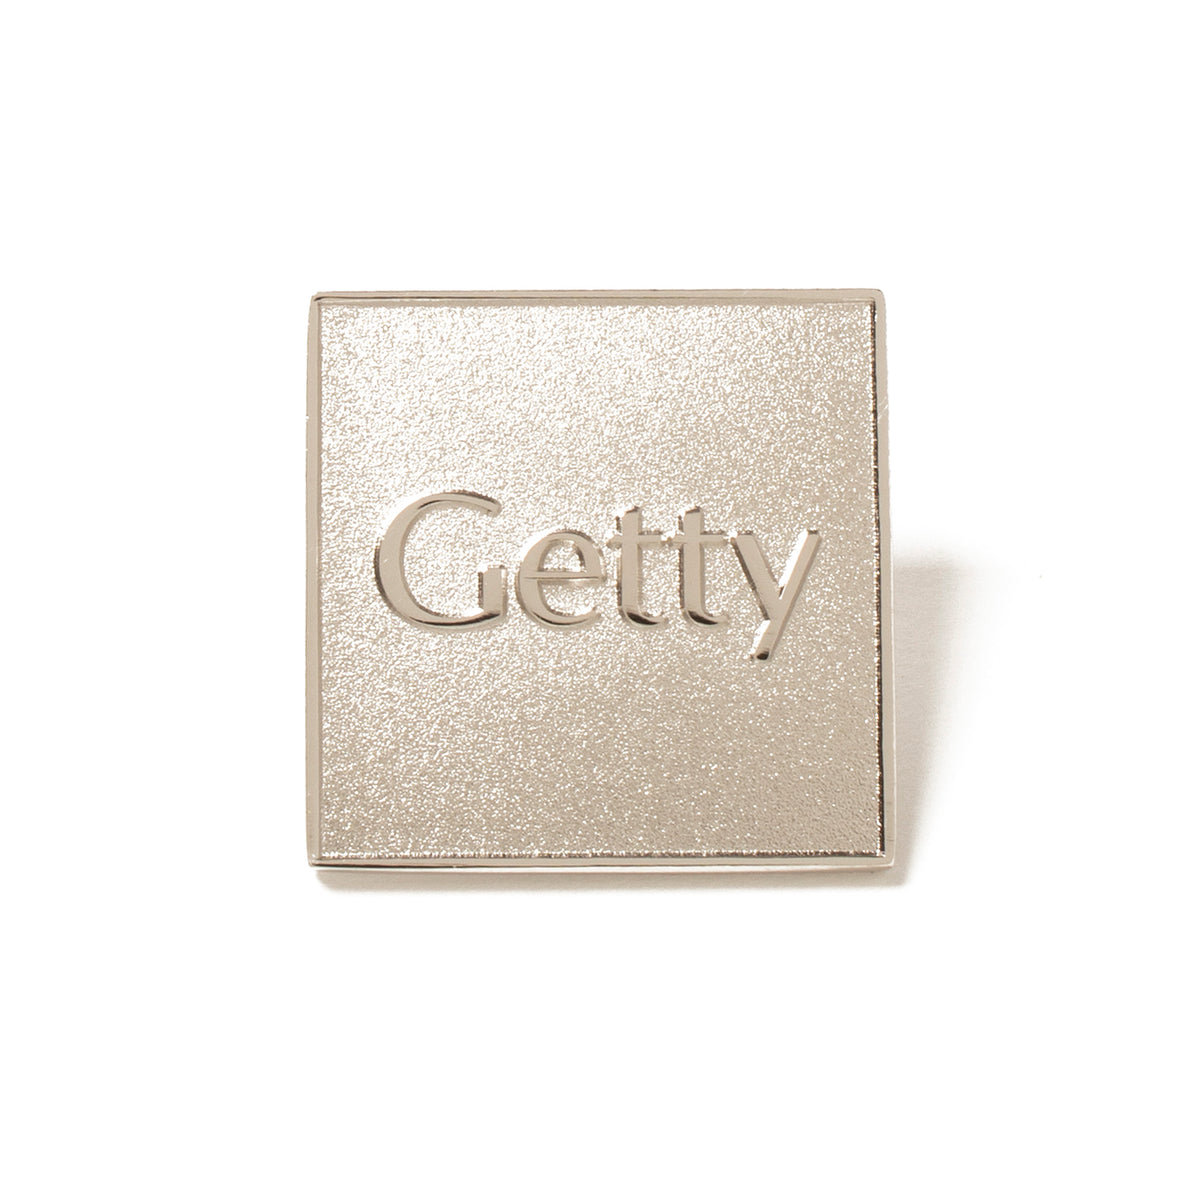 Getty Logo Collector Pin - Silver Tone